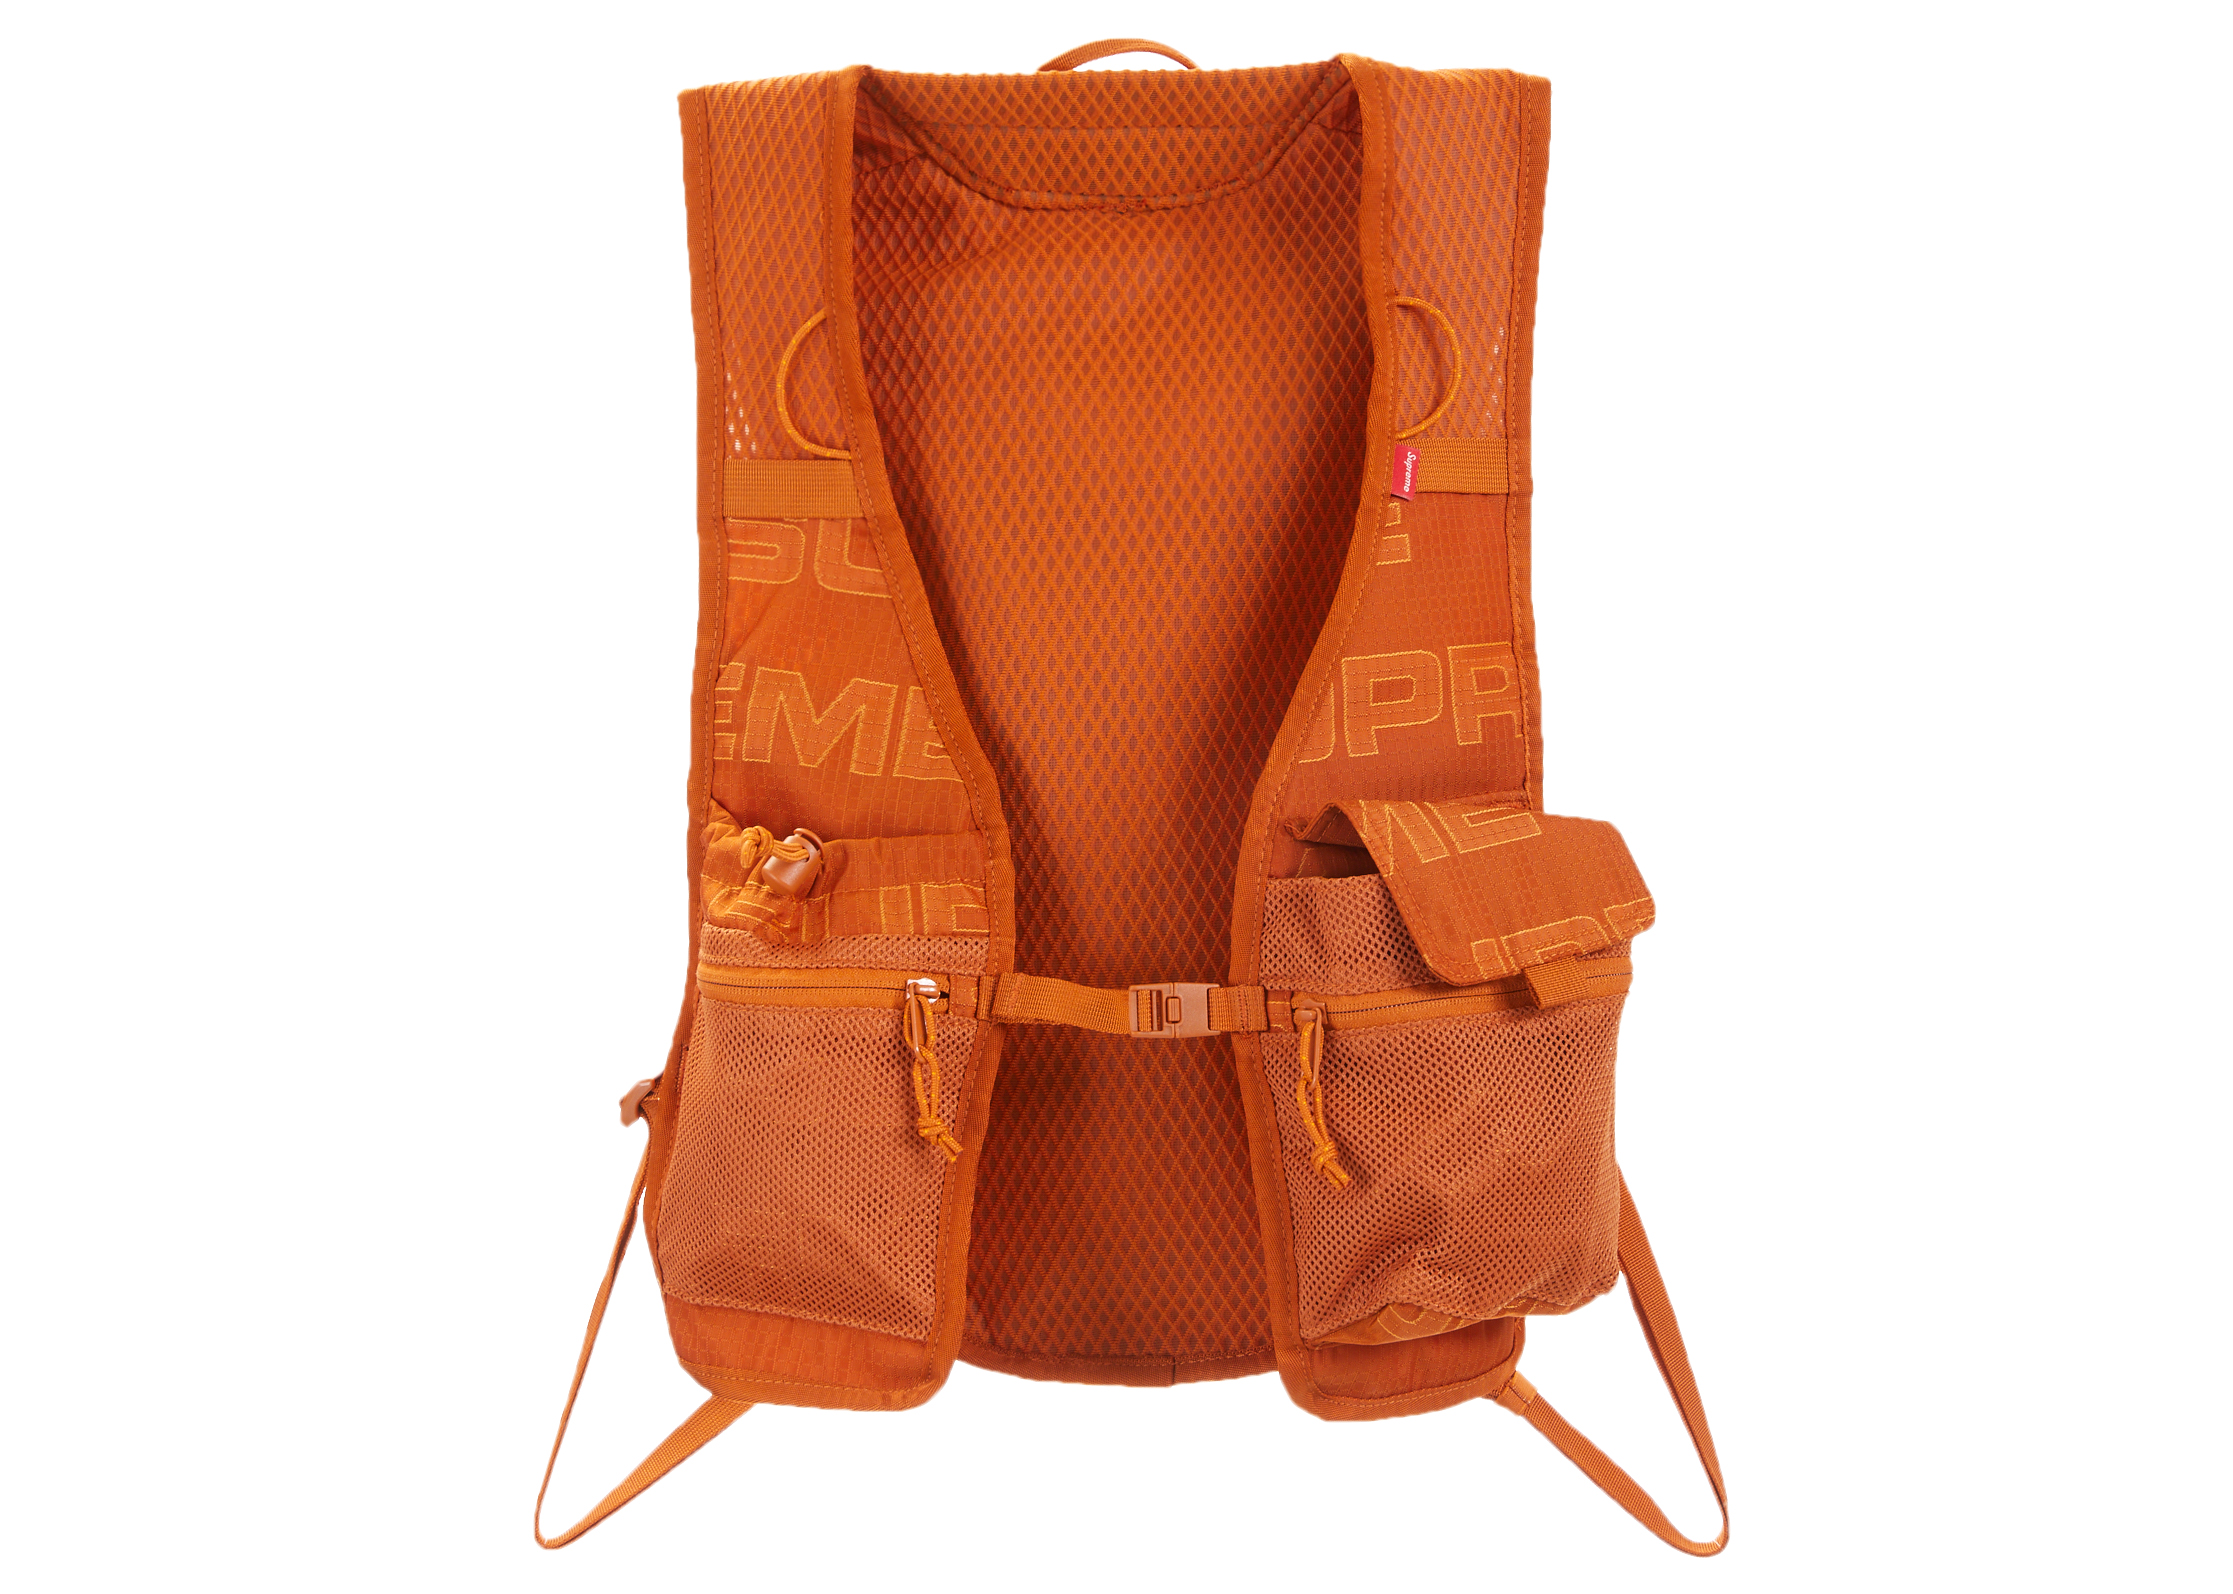 Supreme Pack Vest Orange